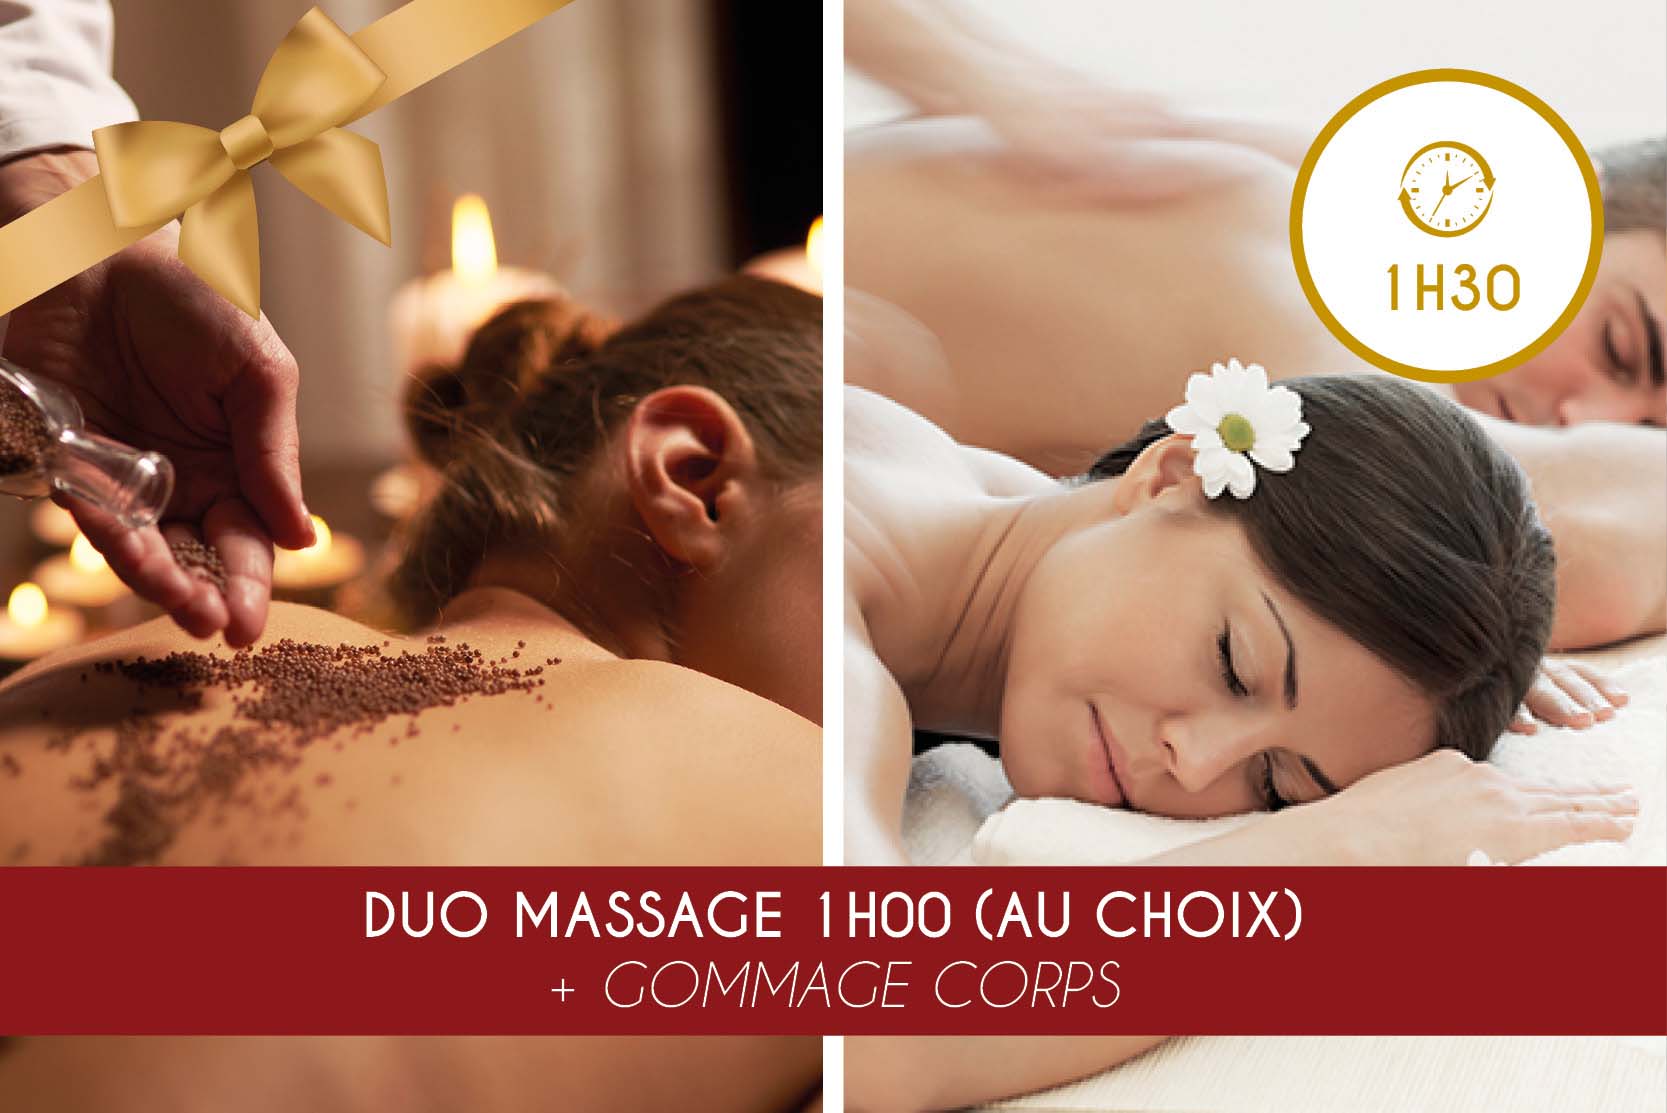 Duo Massage 1h00 (au choix) + Gommage Corps